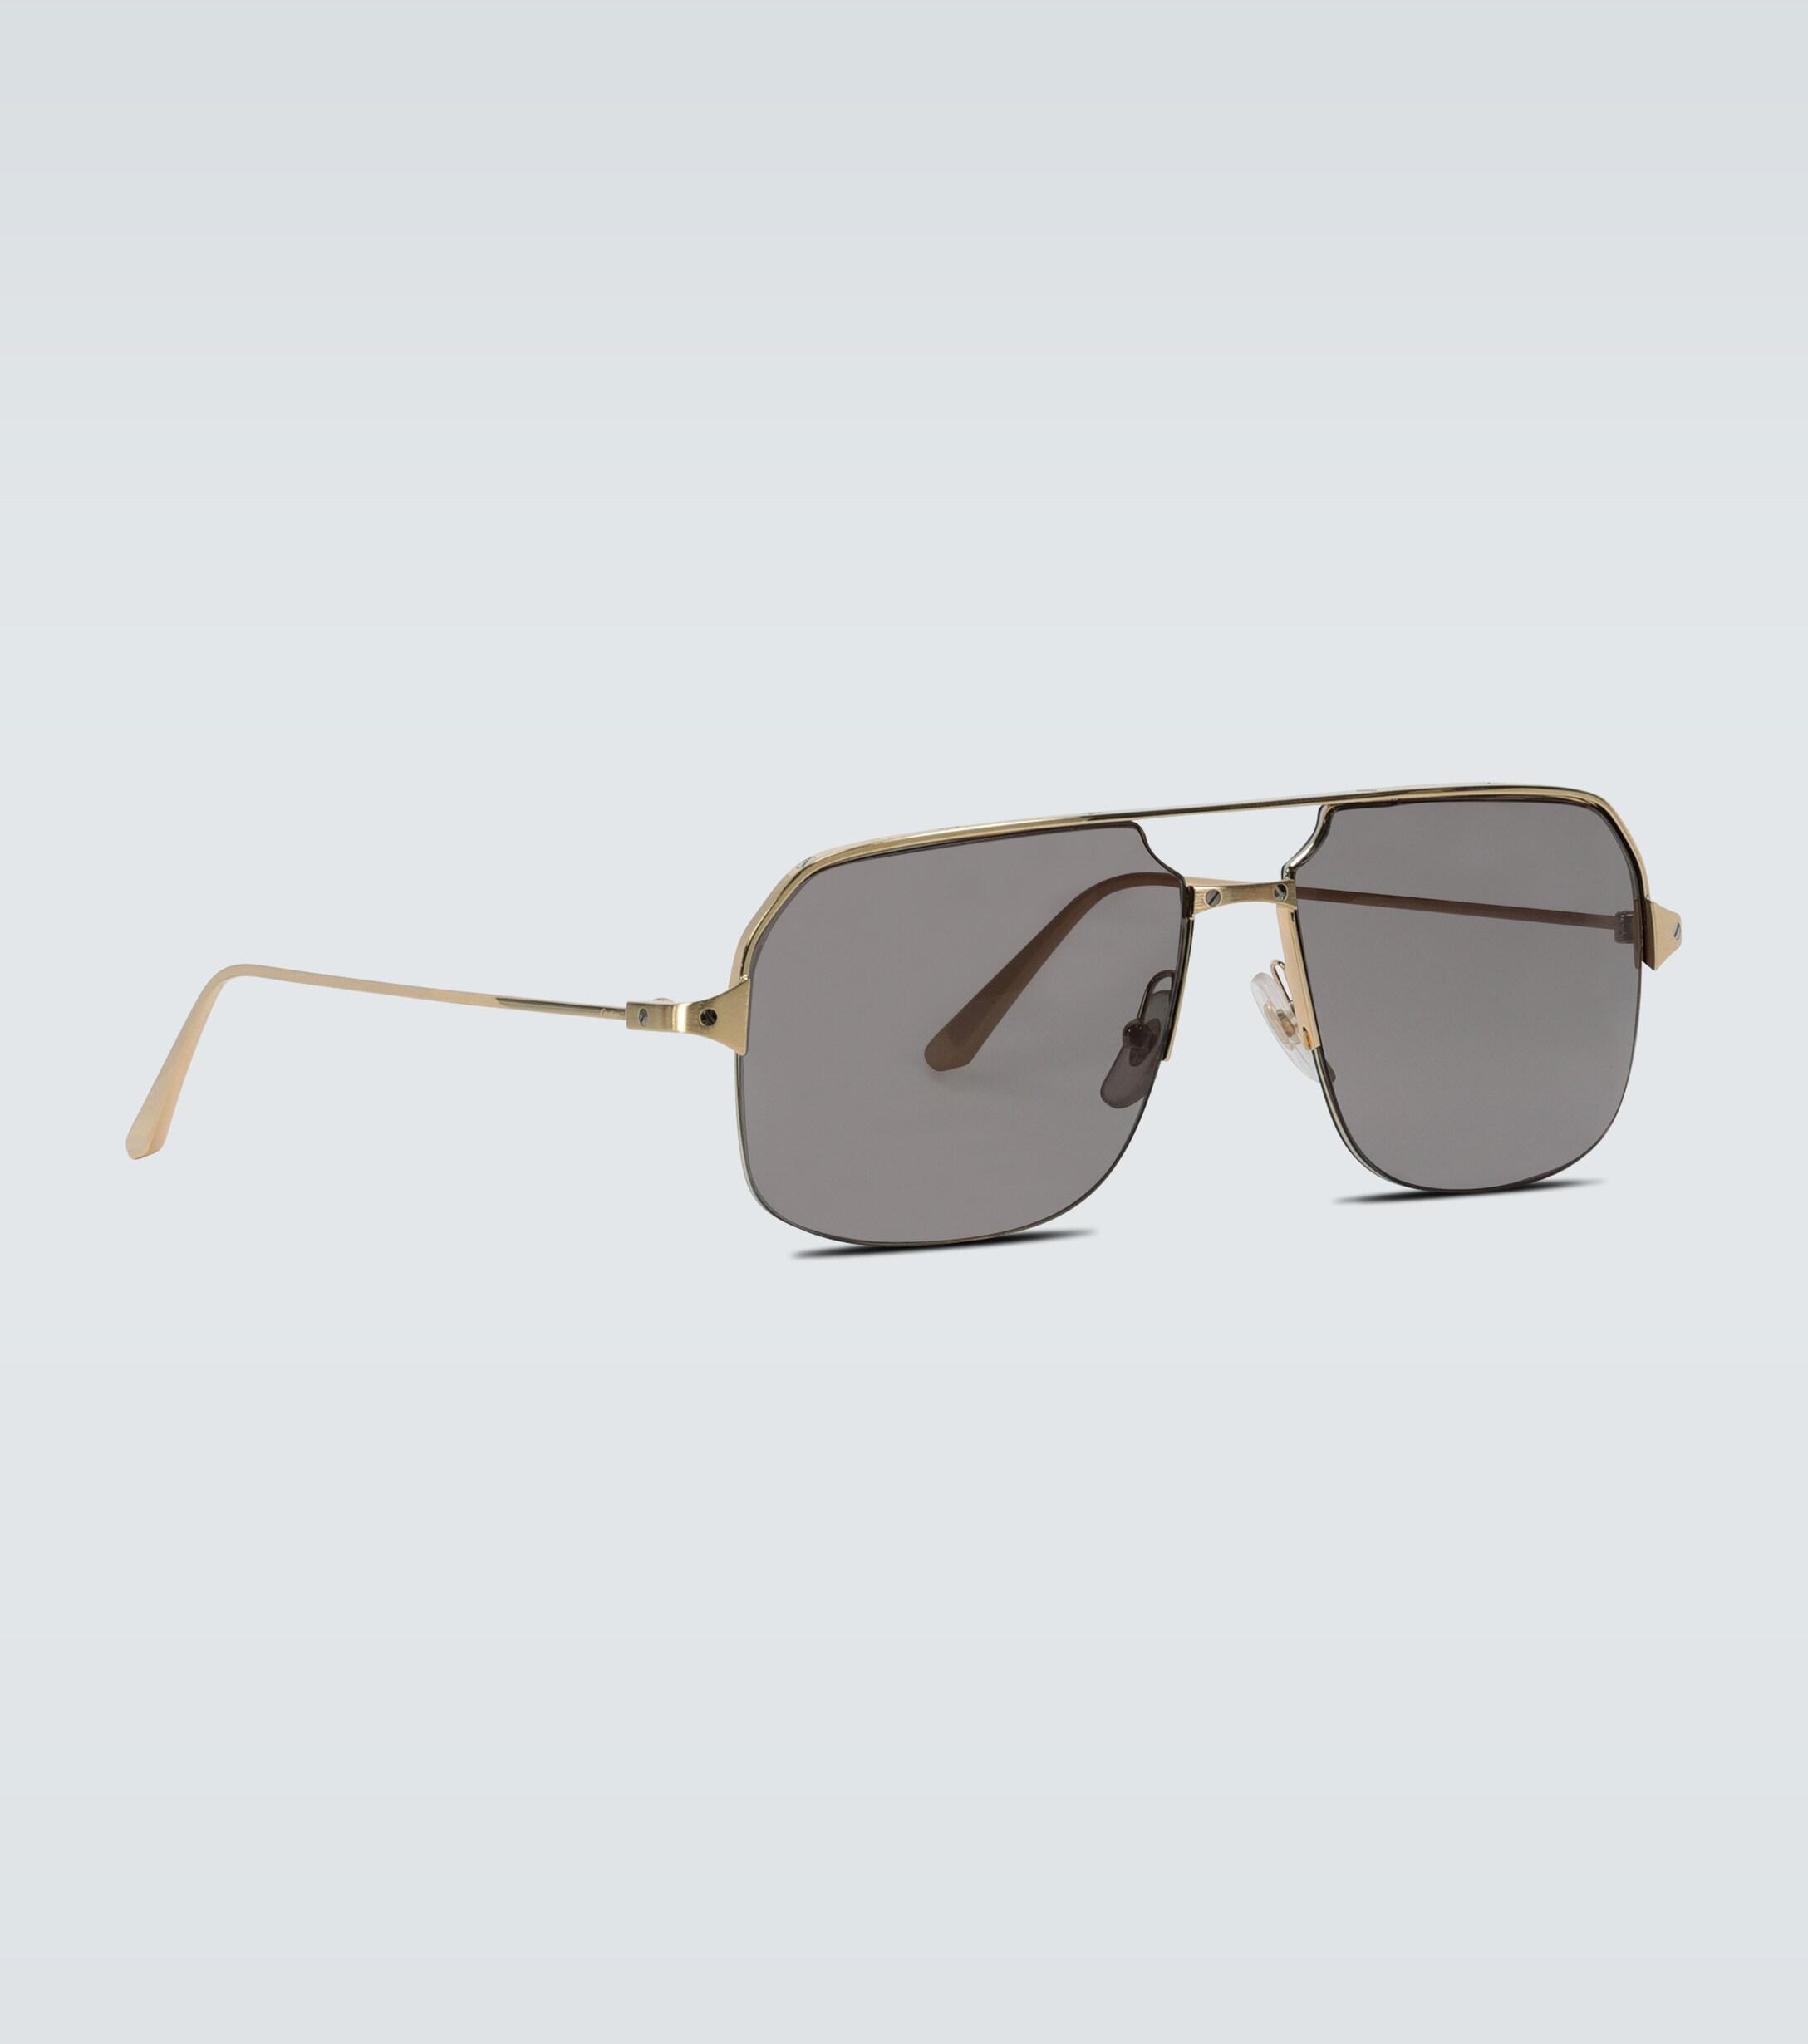 Cartier Metal Aviator Sunglasses in Gold (Metallic) for Men - Lyst